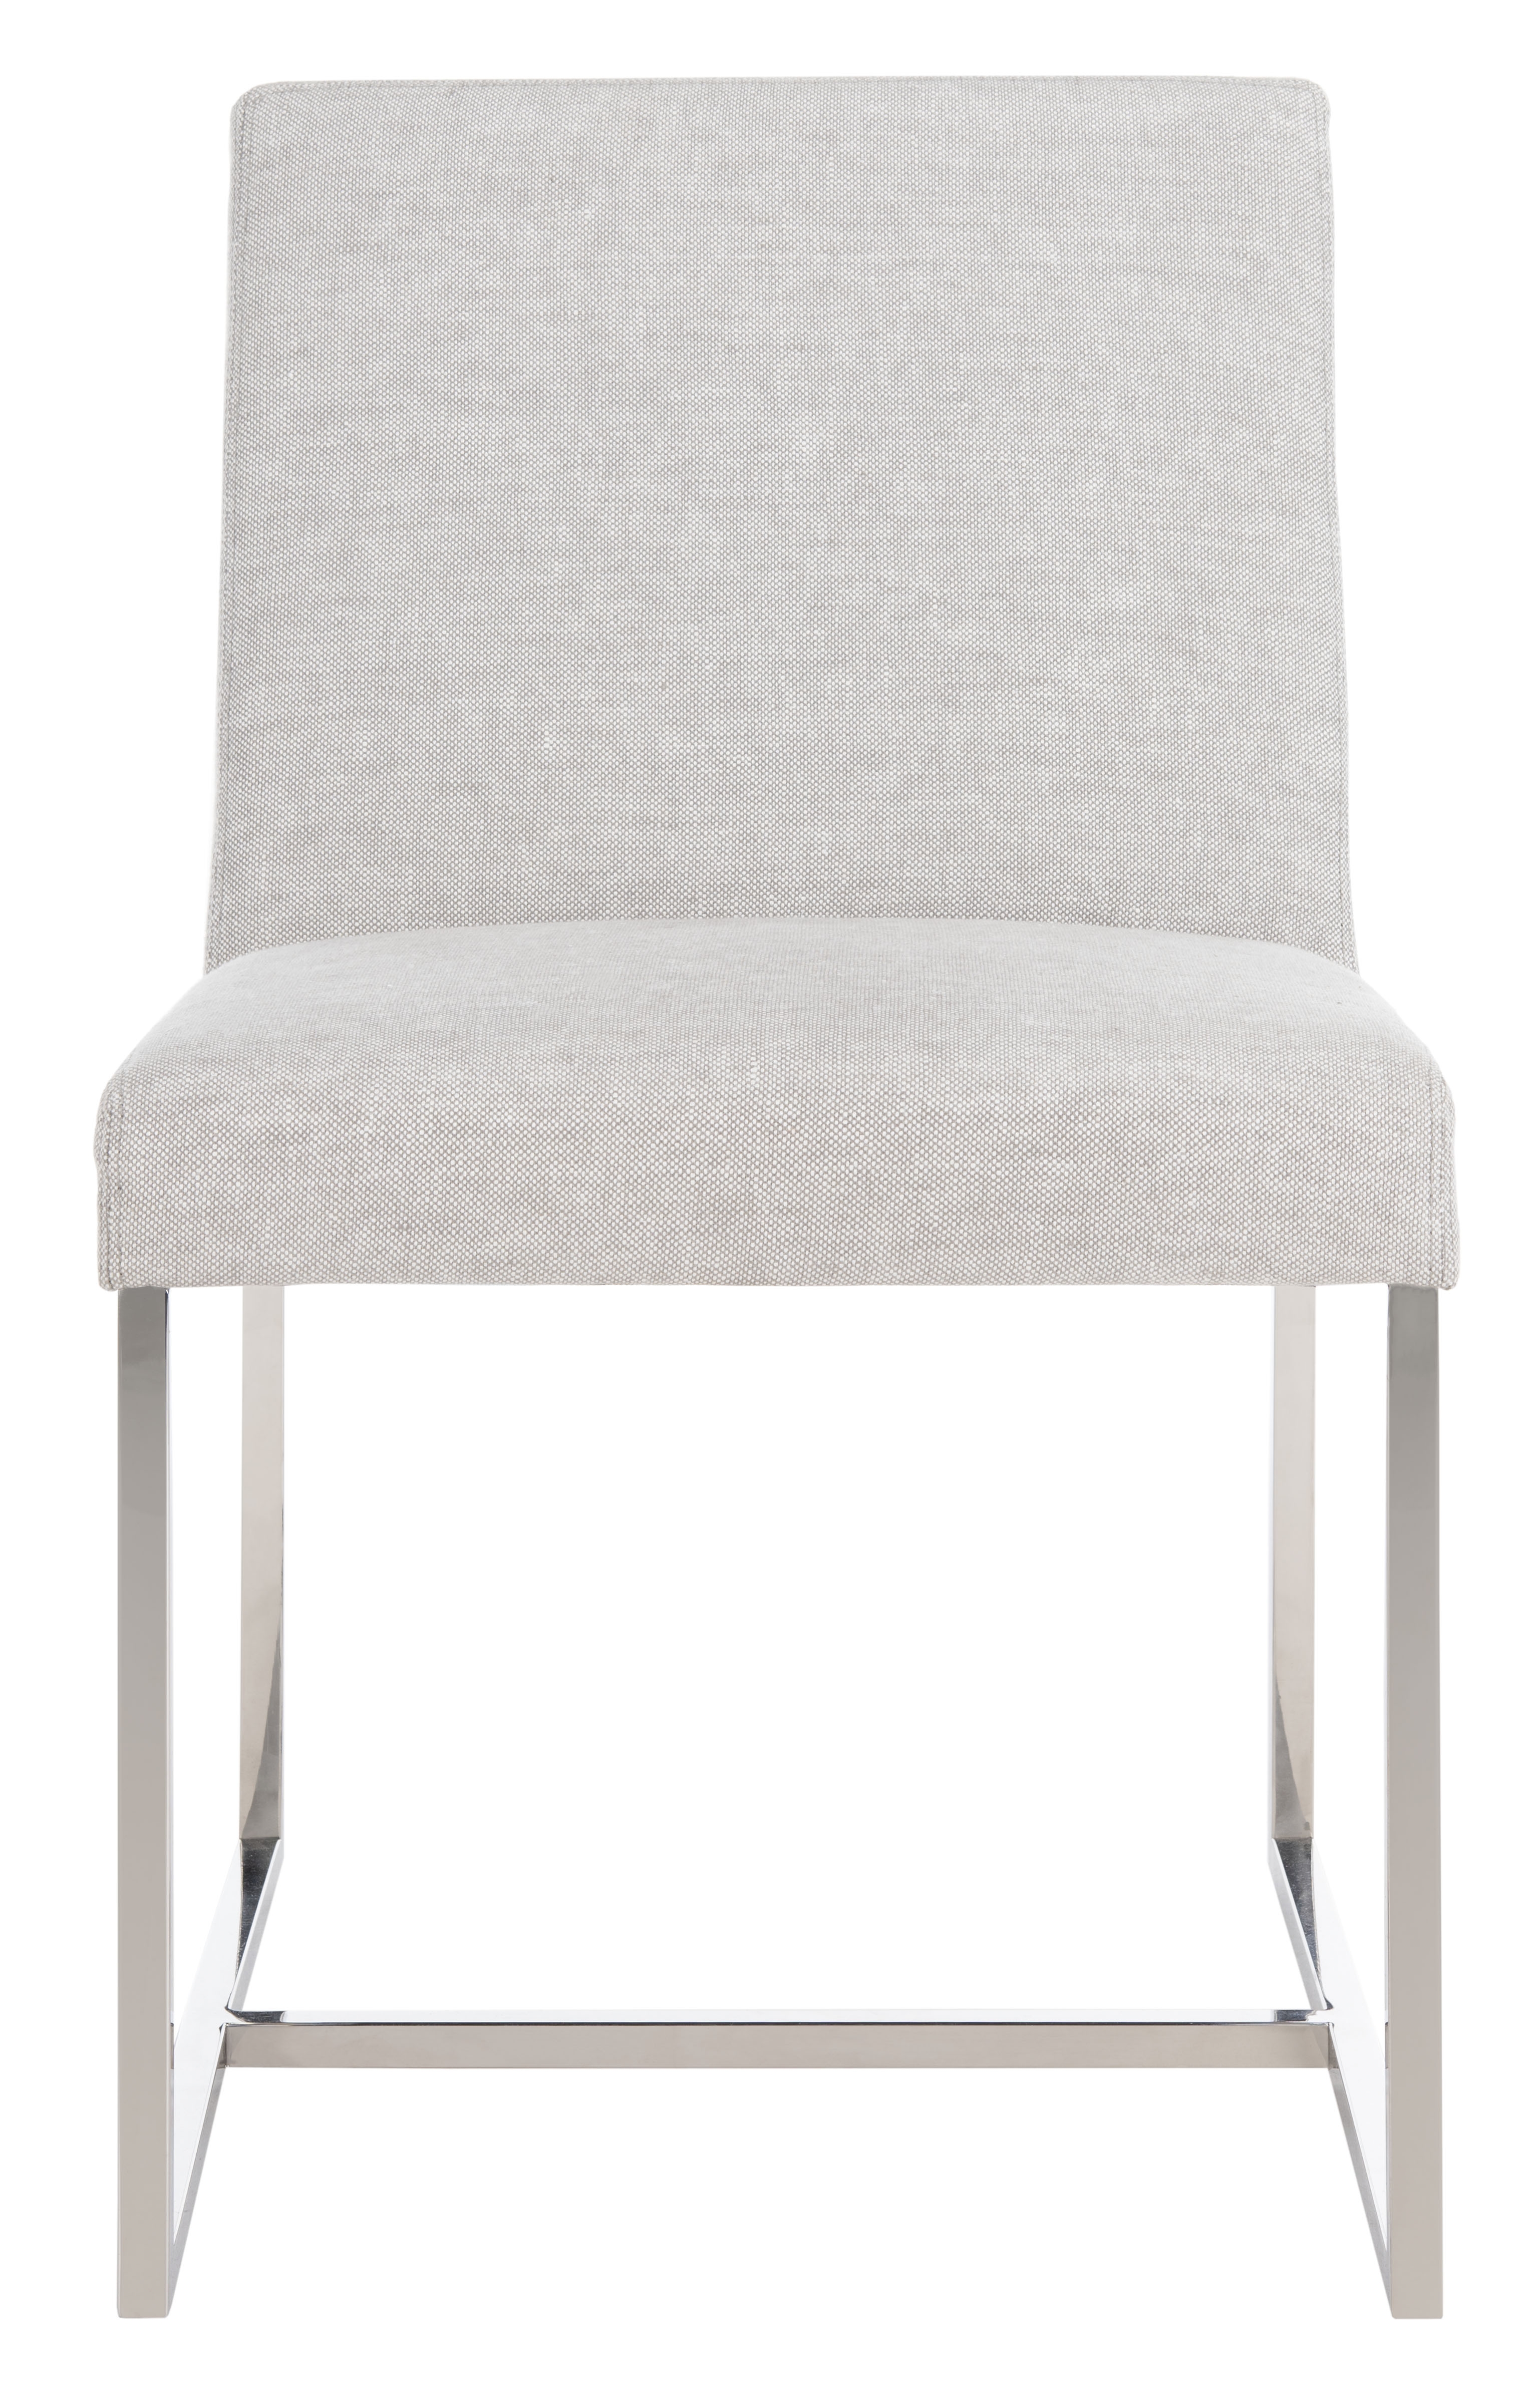 Lombardi Chrome Side Chair - Grey / White - Arlo Home - Image 0